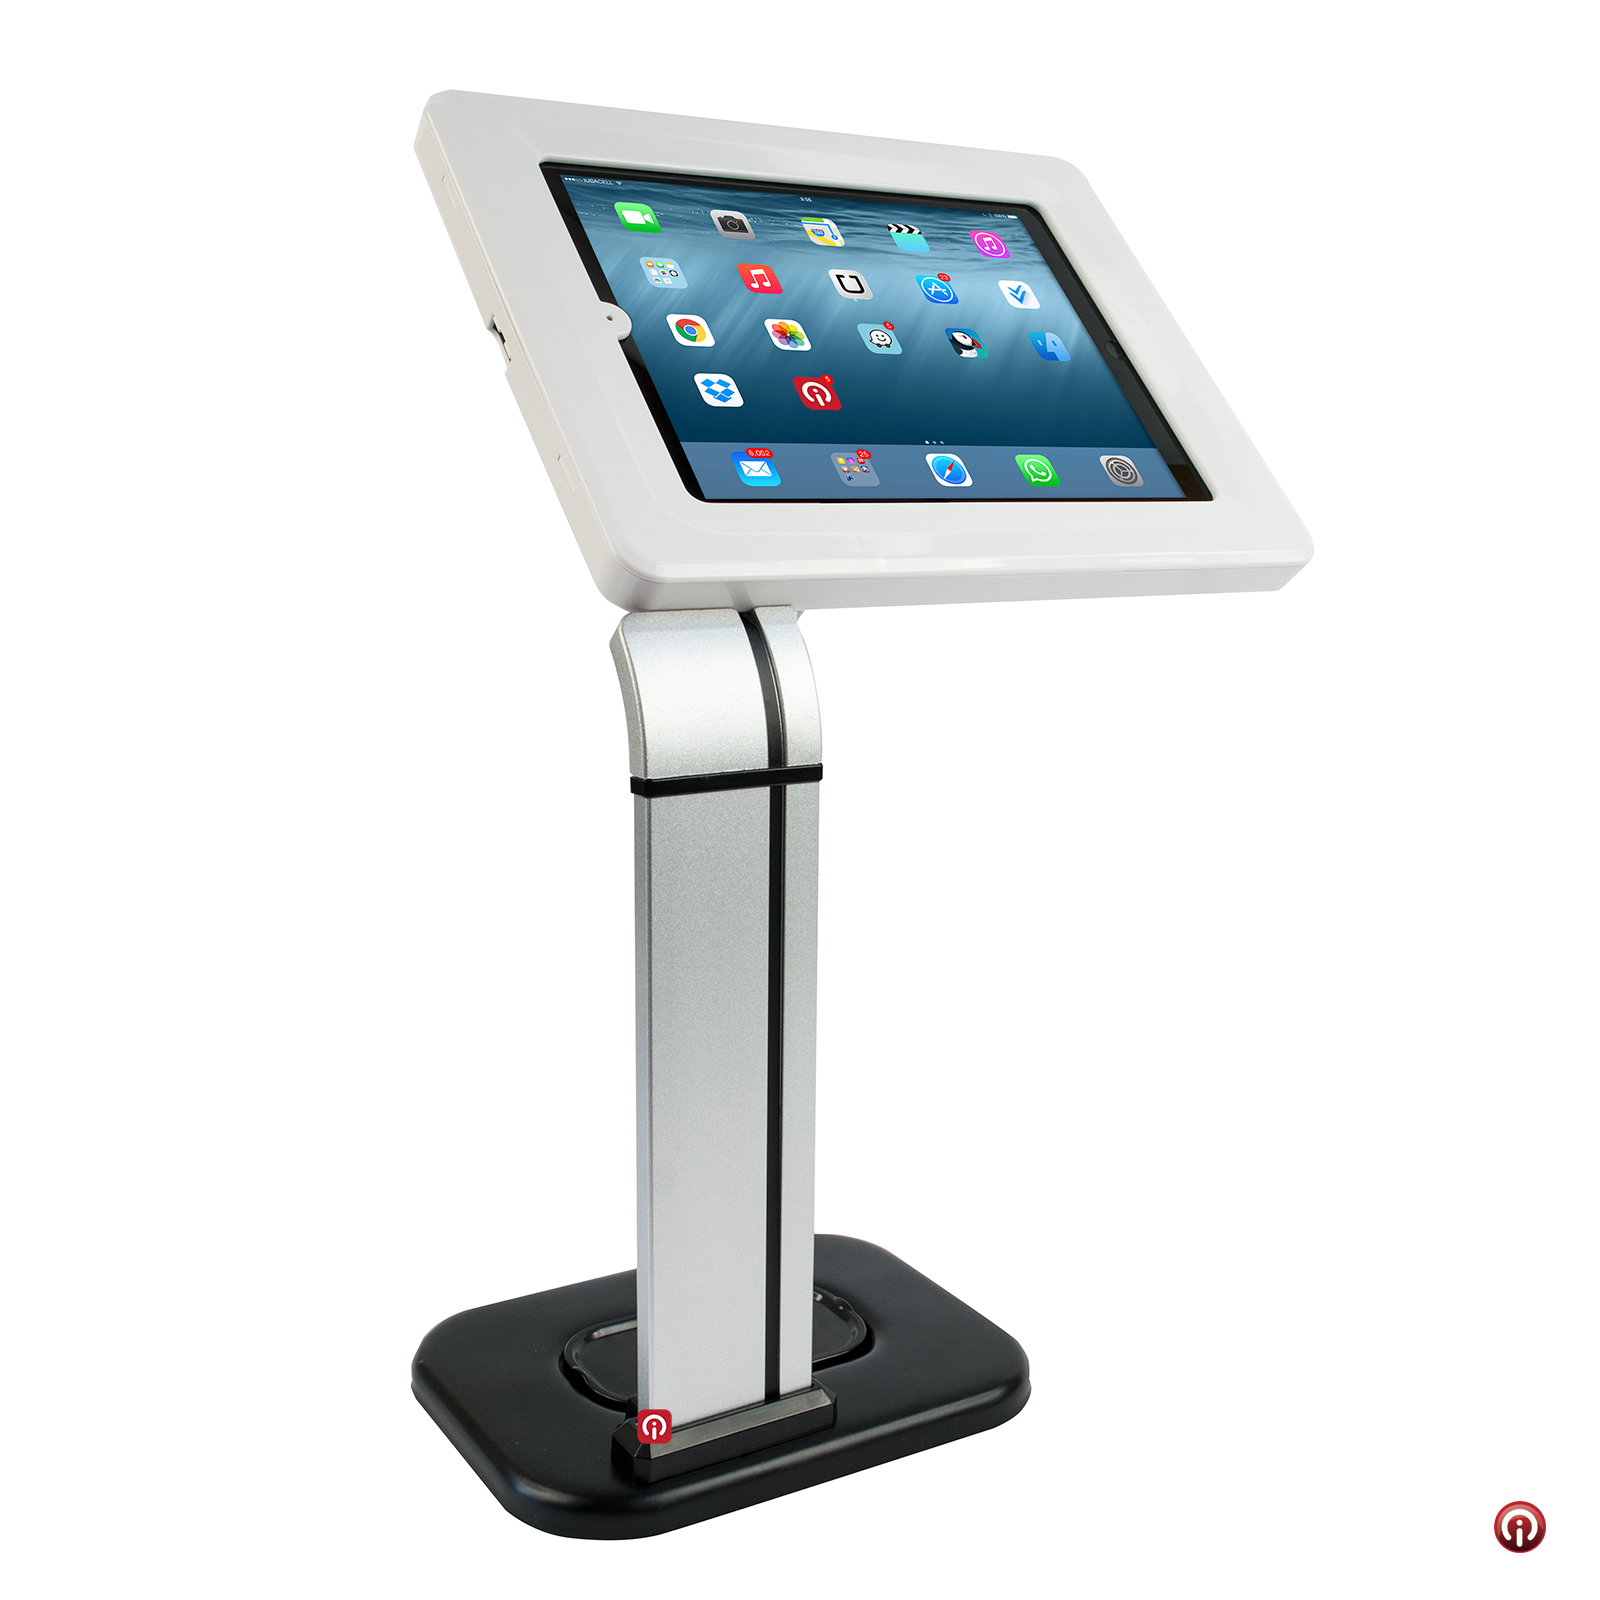 TSCLK14 soporte base kiosko pedestal universal seguridad antirrobo para  iPad y tablets de 9 a 11 pulgadas